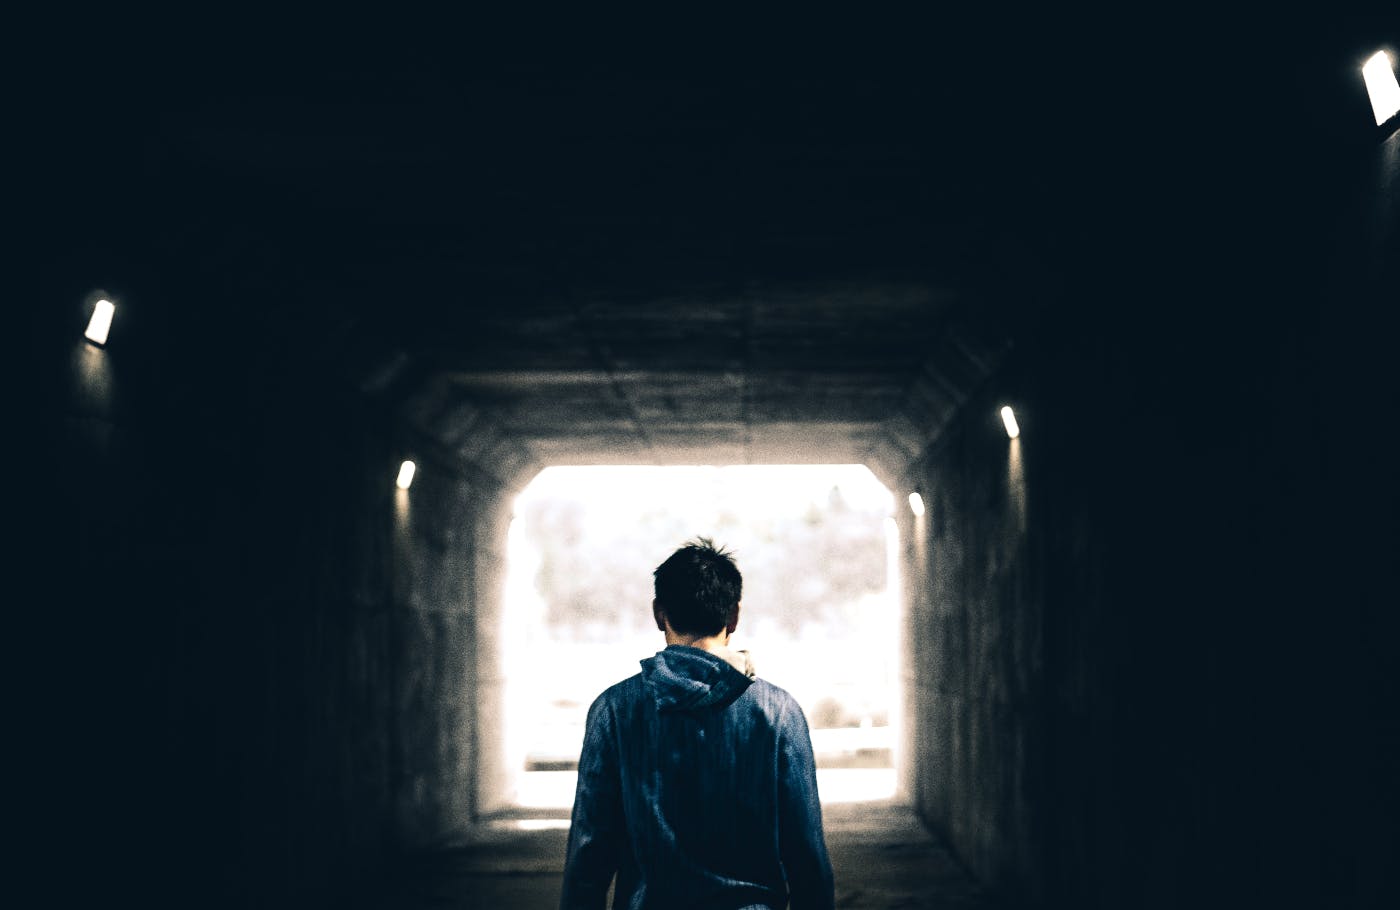 A person walking alone through a dark tunnel